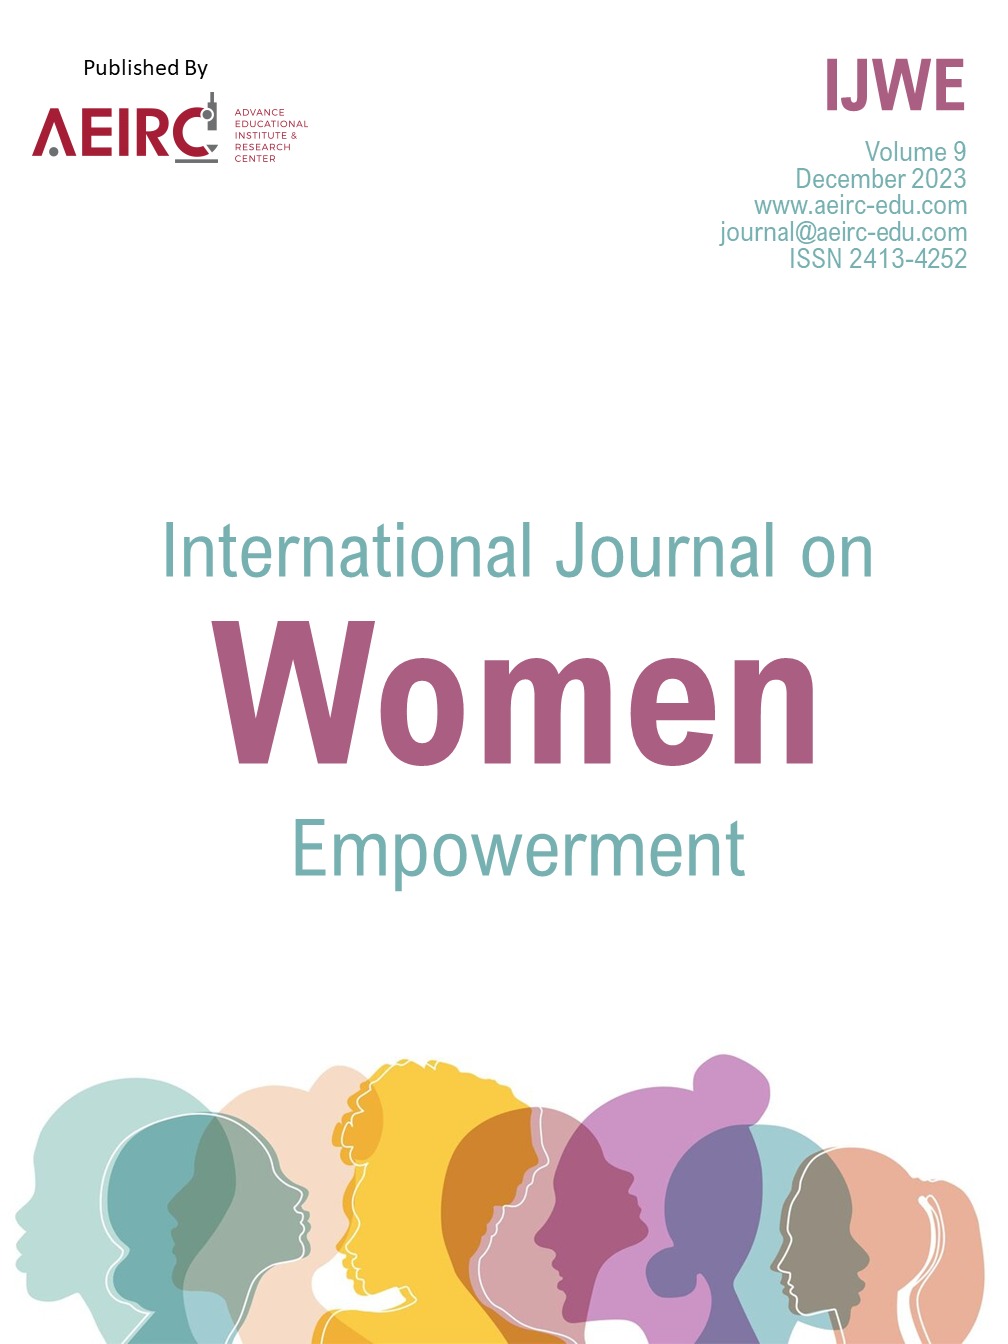 					View Vol. 9 (2023): Internation Journal on Women Empowerment
				